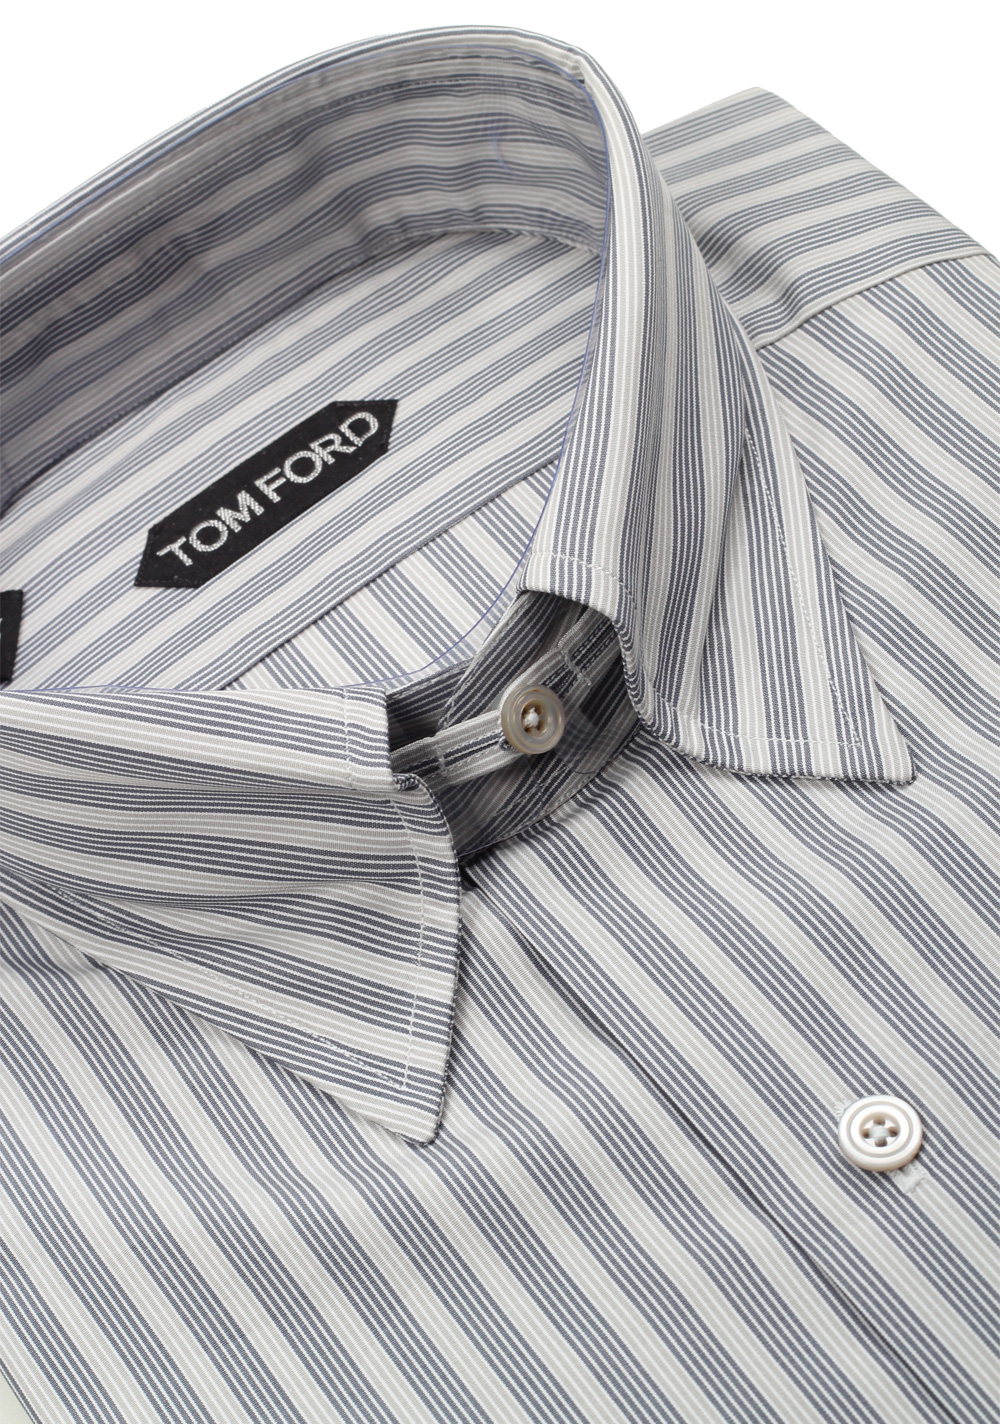 TOM FORD Striped Gray High Collar Dress Shirt Size 40 / 15,75 U.S. | Costume Limité